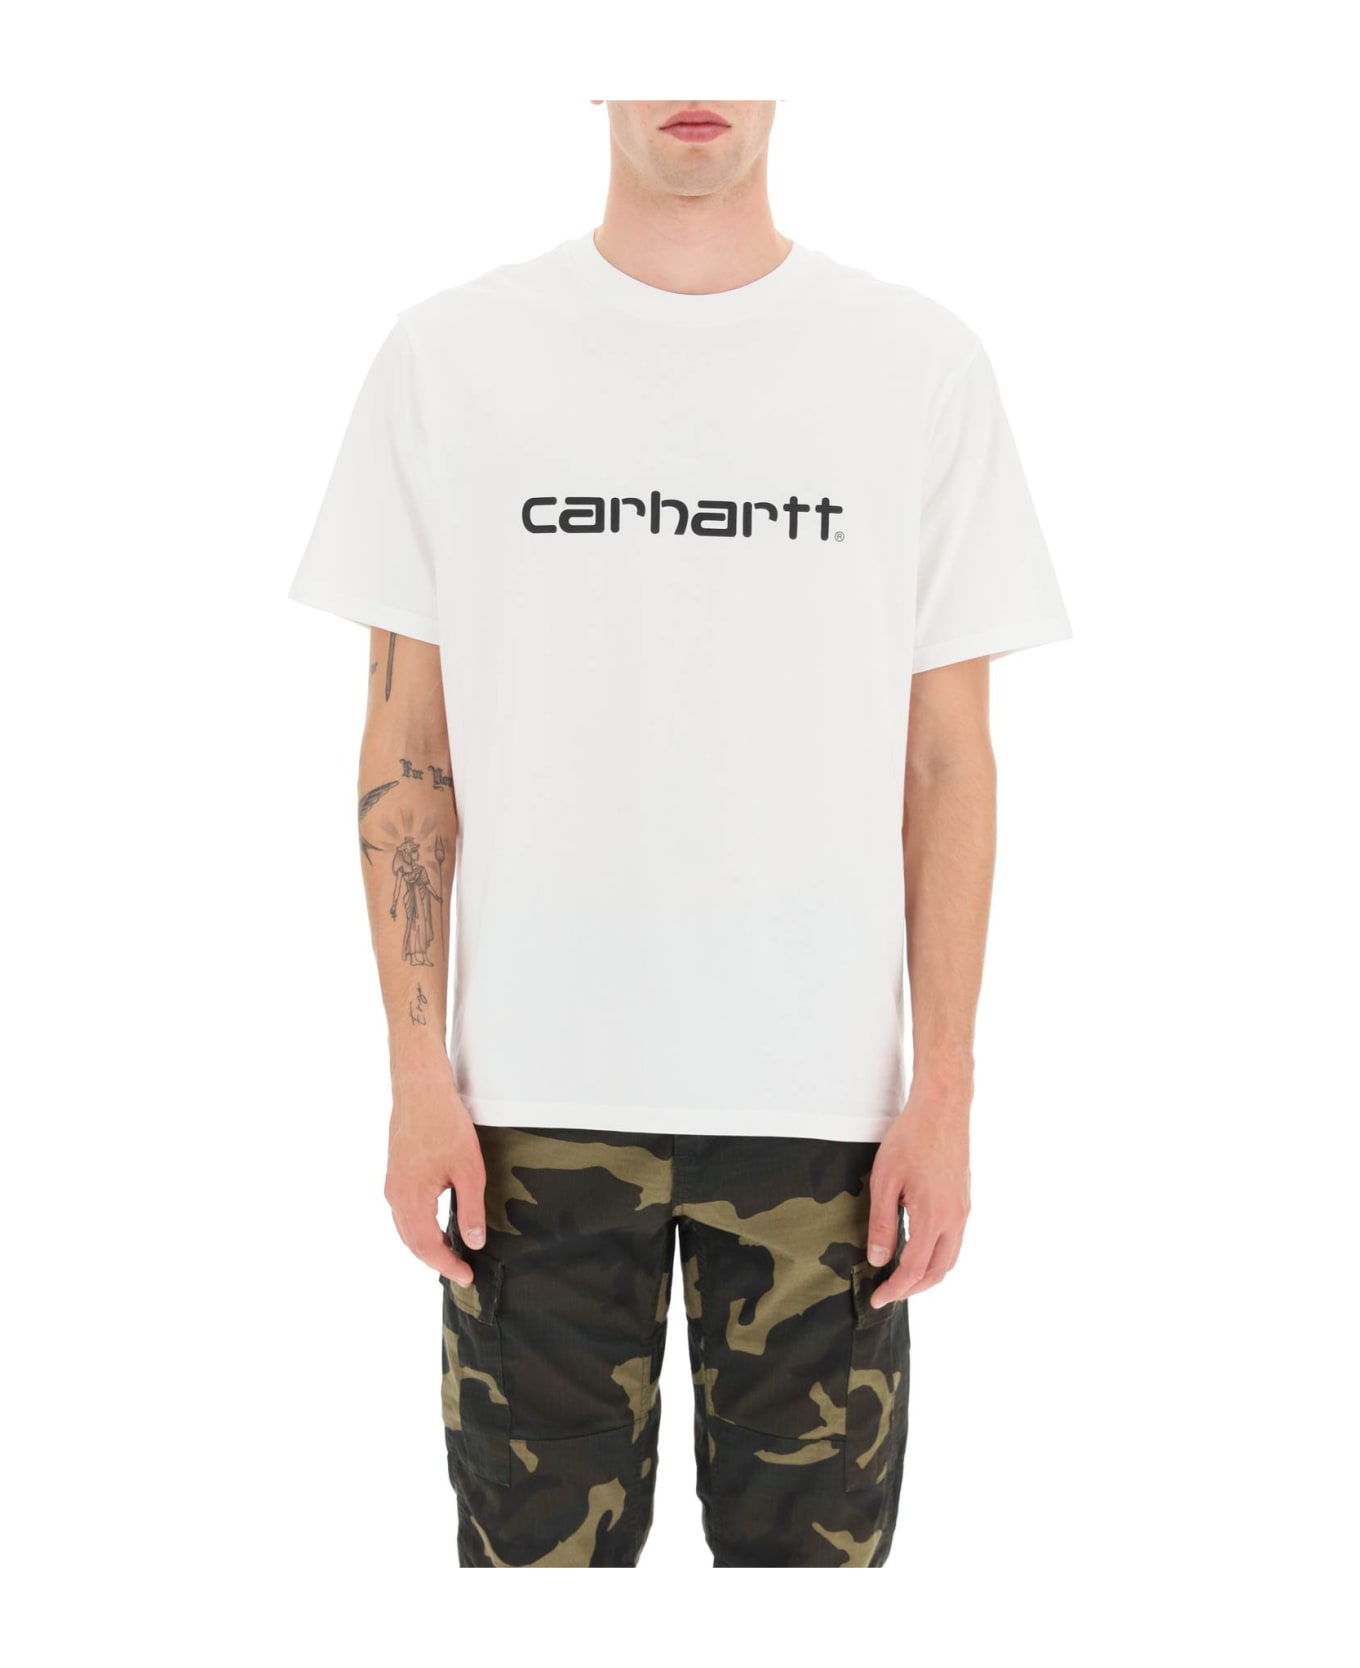 Carhartt Script T-shirt - WHITE BLACK (White)